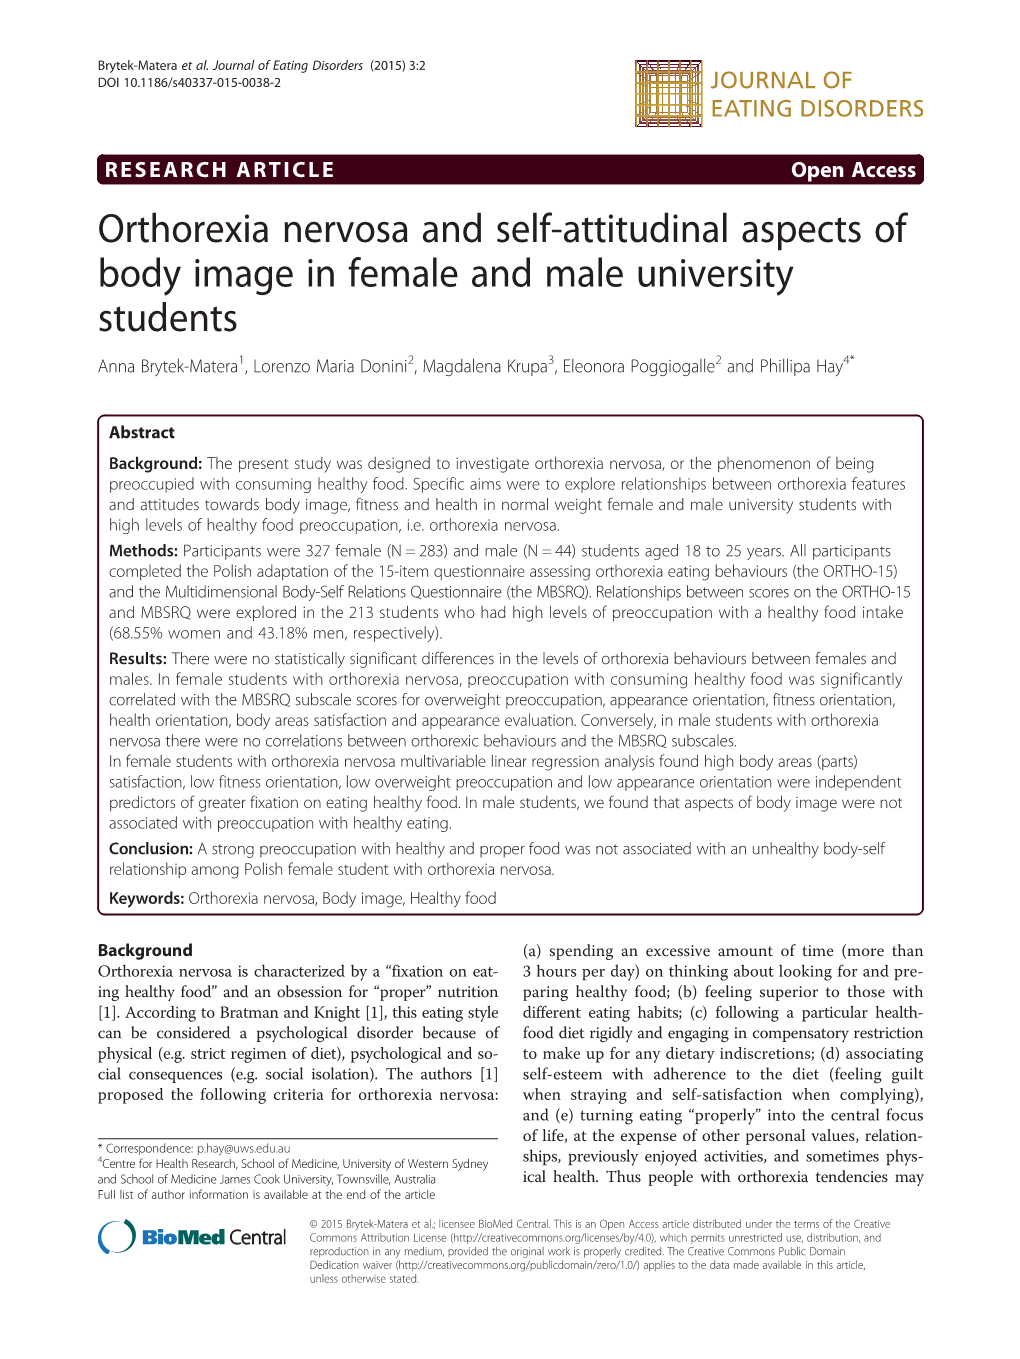 Orthorexia Nervosa and Self-Attitudinal Aspects of Body